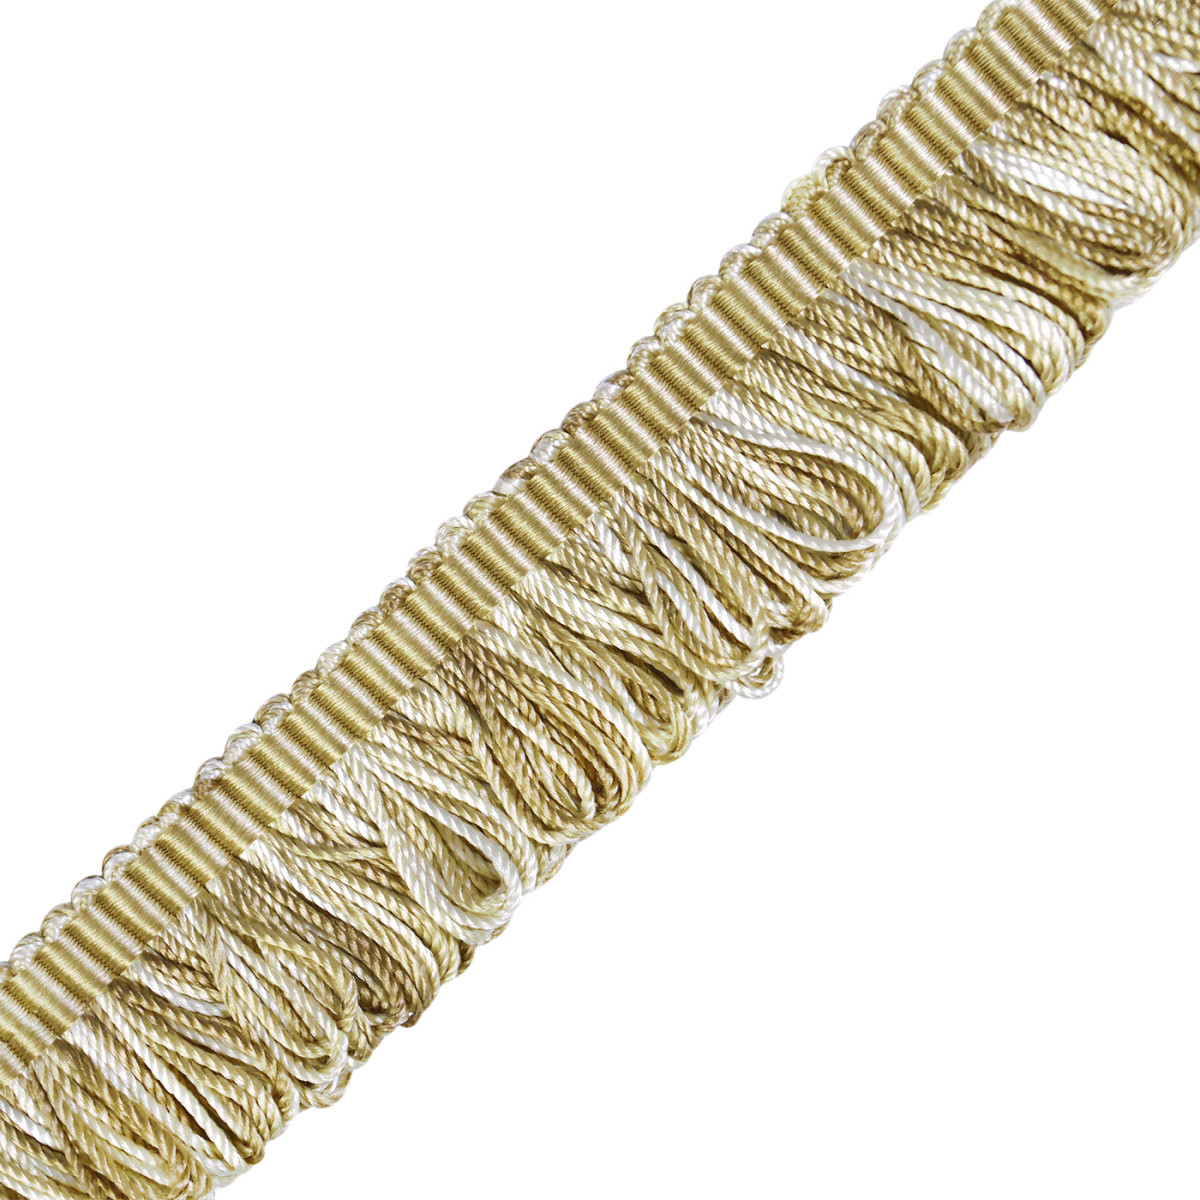 Metallic Tassel Fringe with Braid Trim - 1-1/2 inch